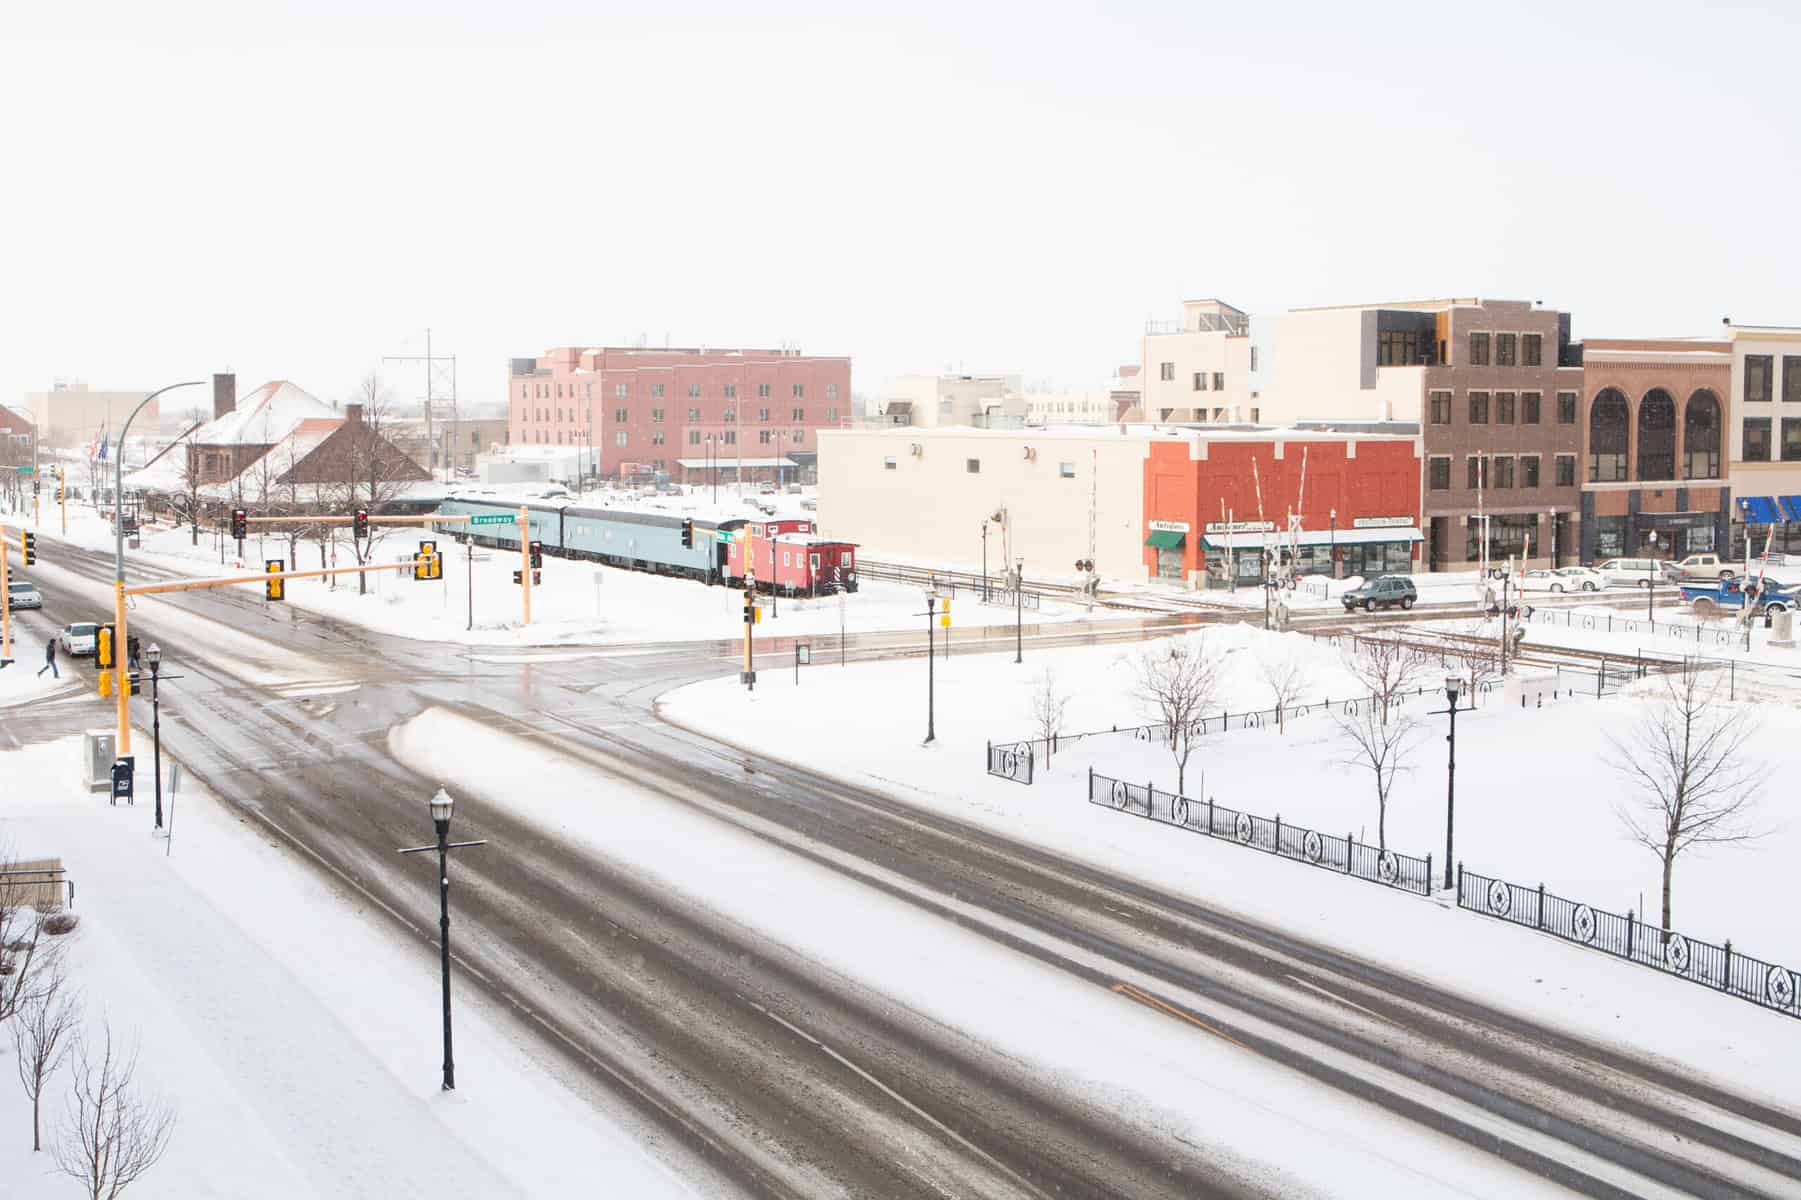 A snowstorm in Fargo, North Dakota